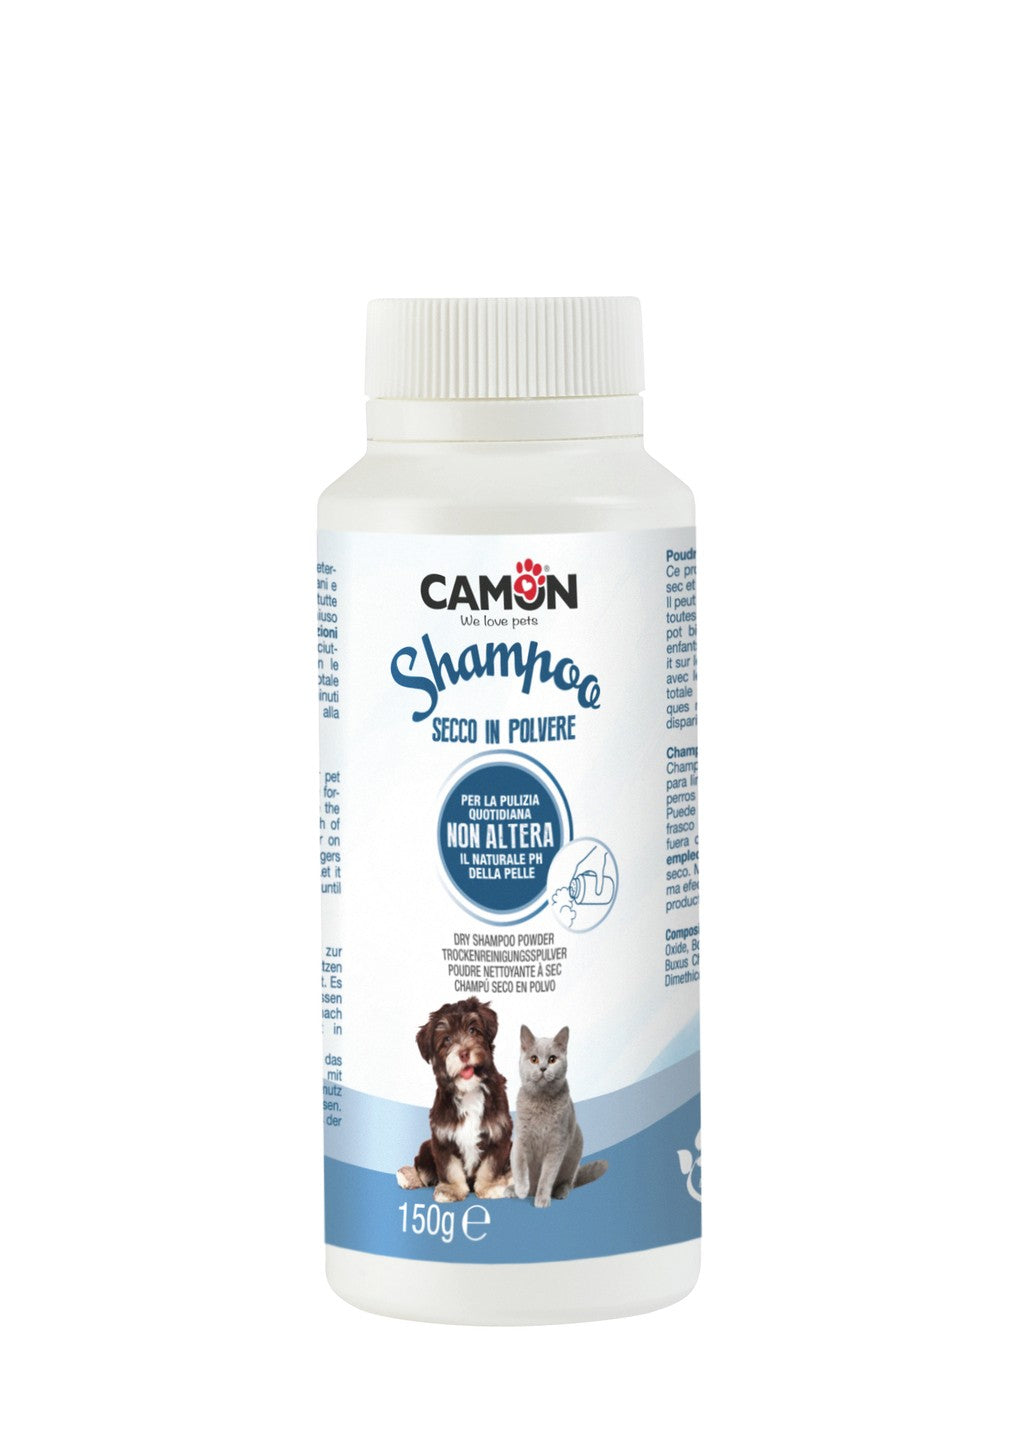 Camon Dry Cleaning Shampoo Powder 150g